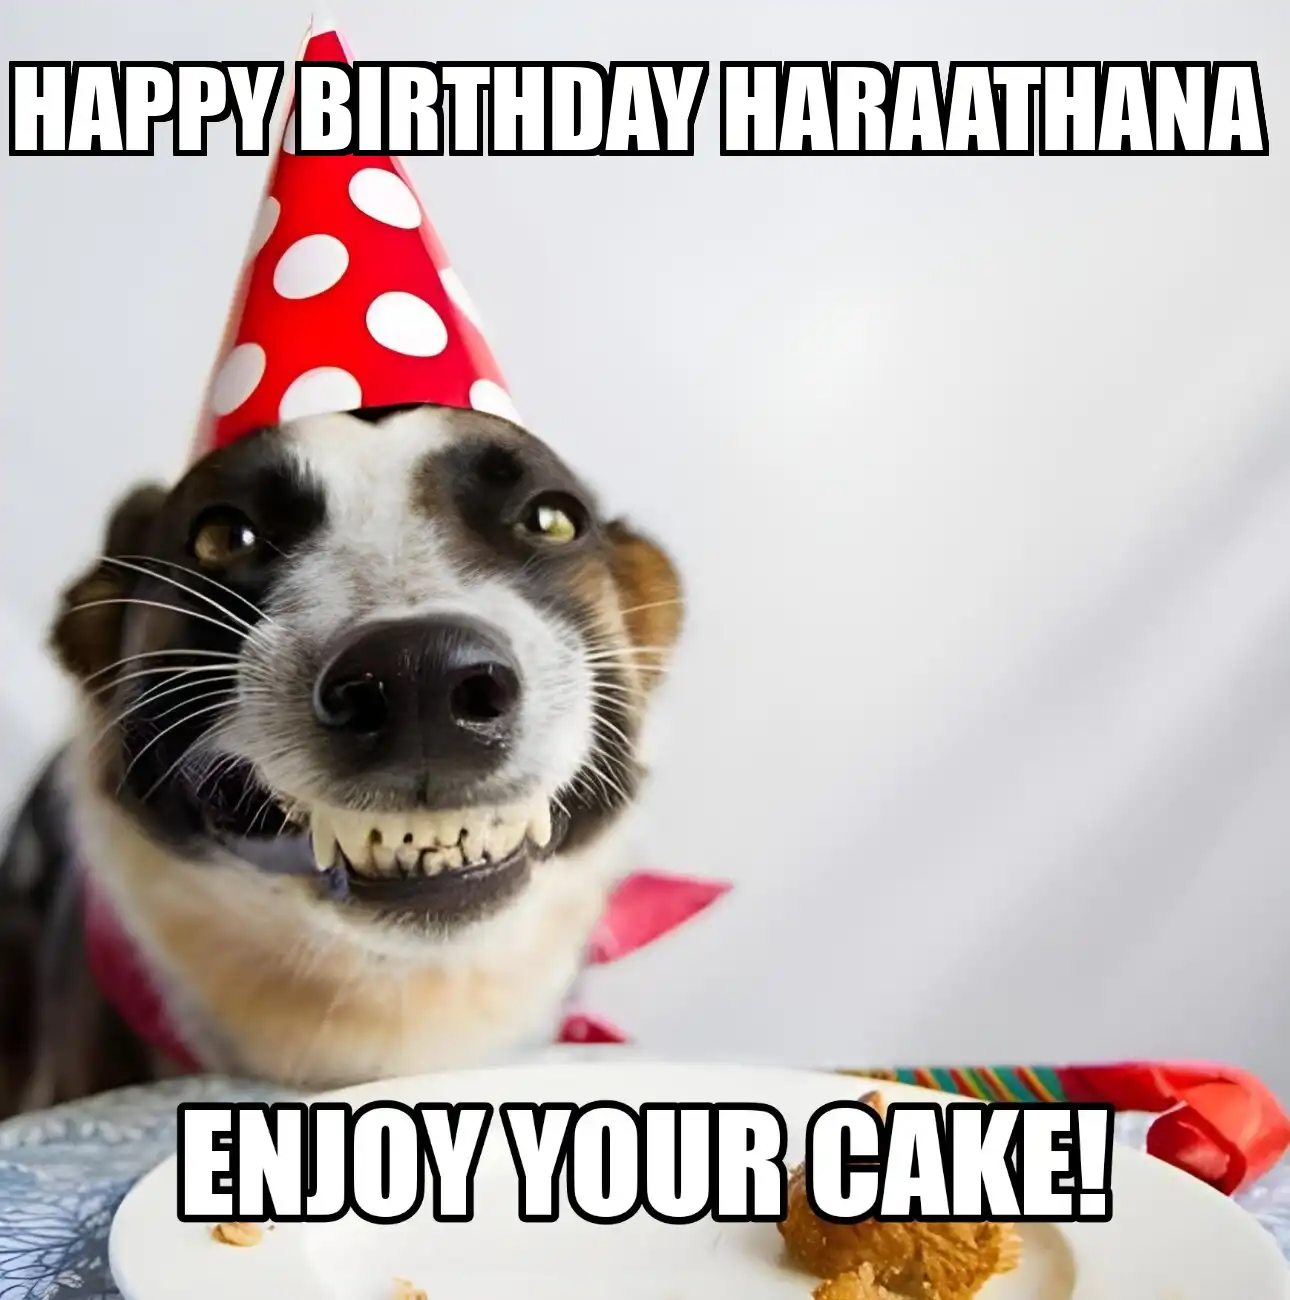 Happy Birthday Haraathana Enjoy Your Cake Dog Meme